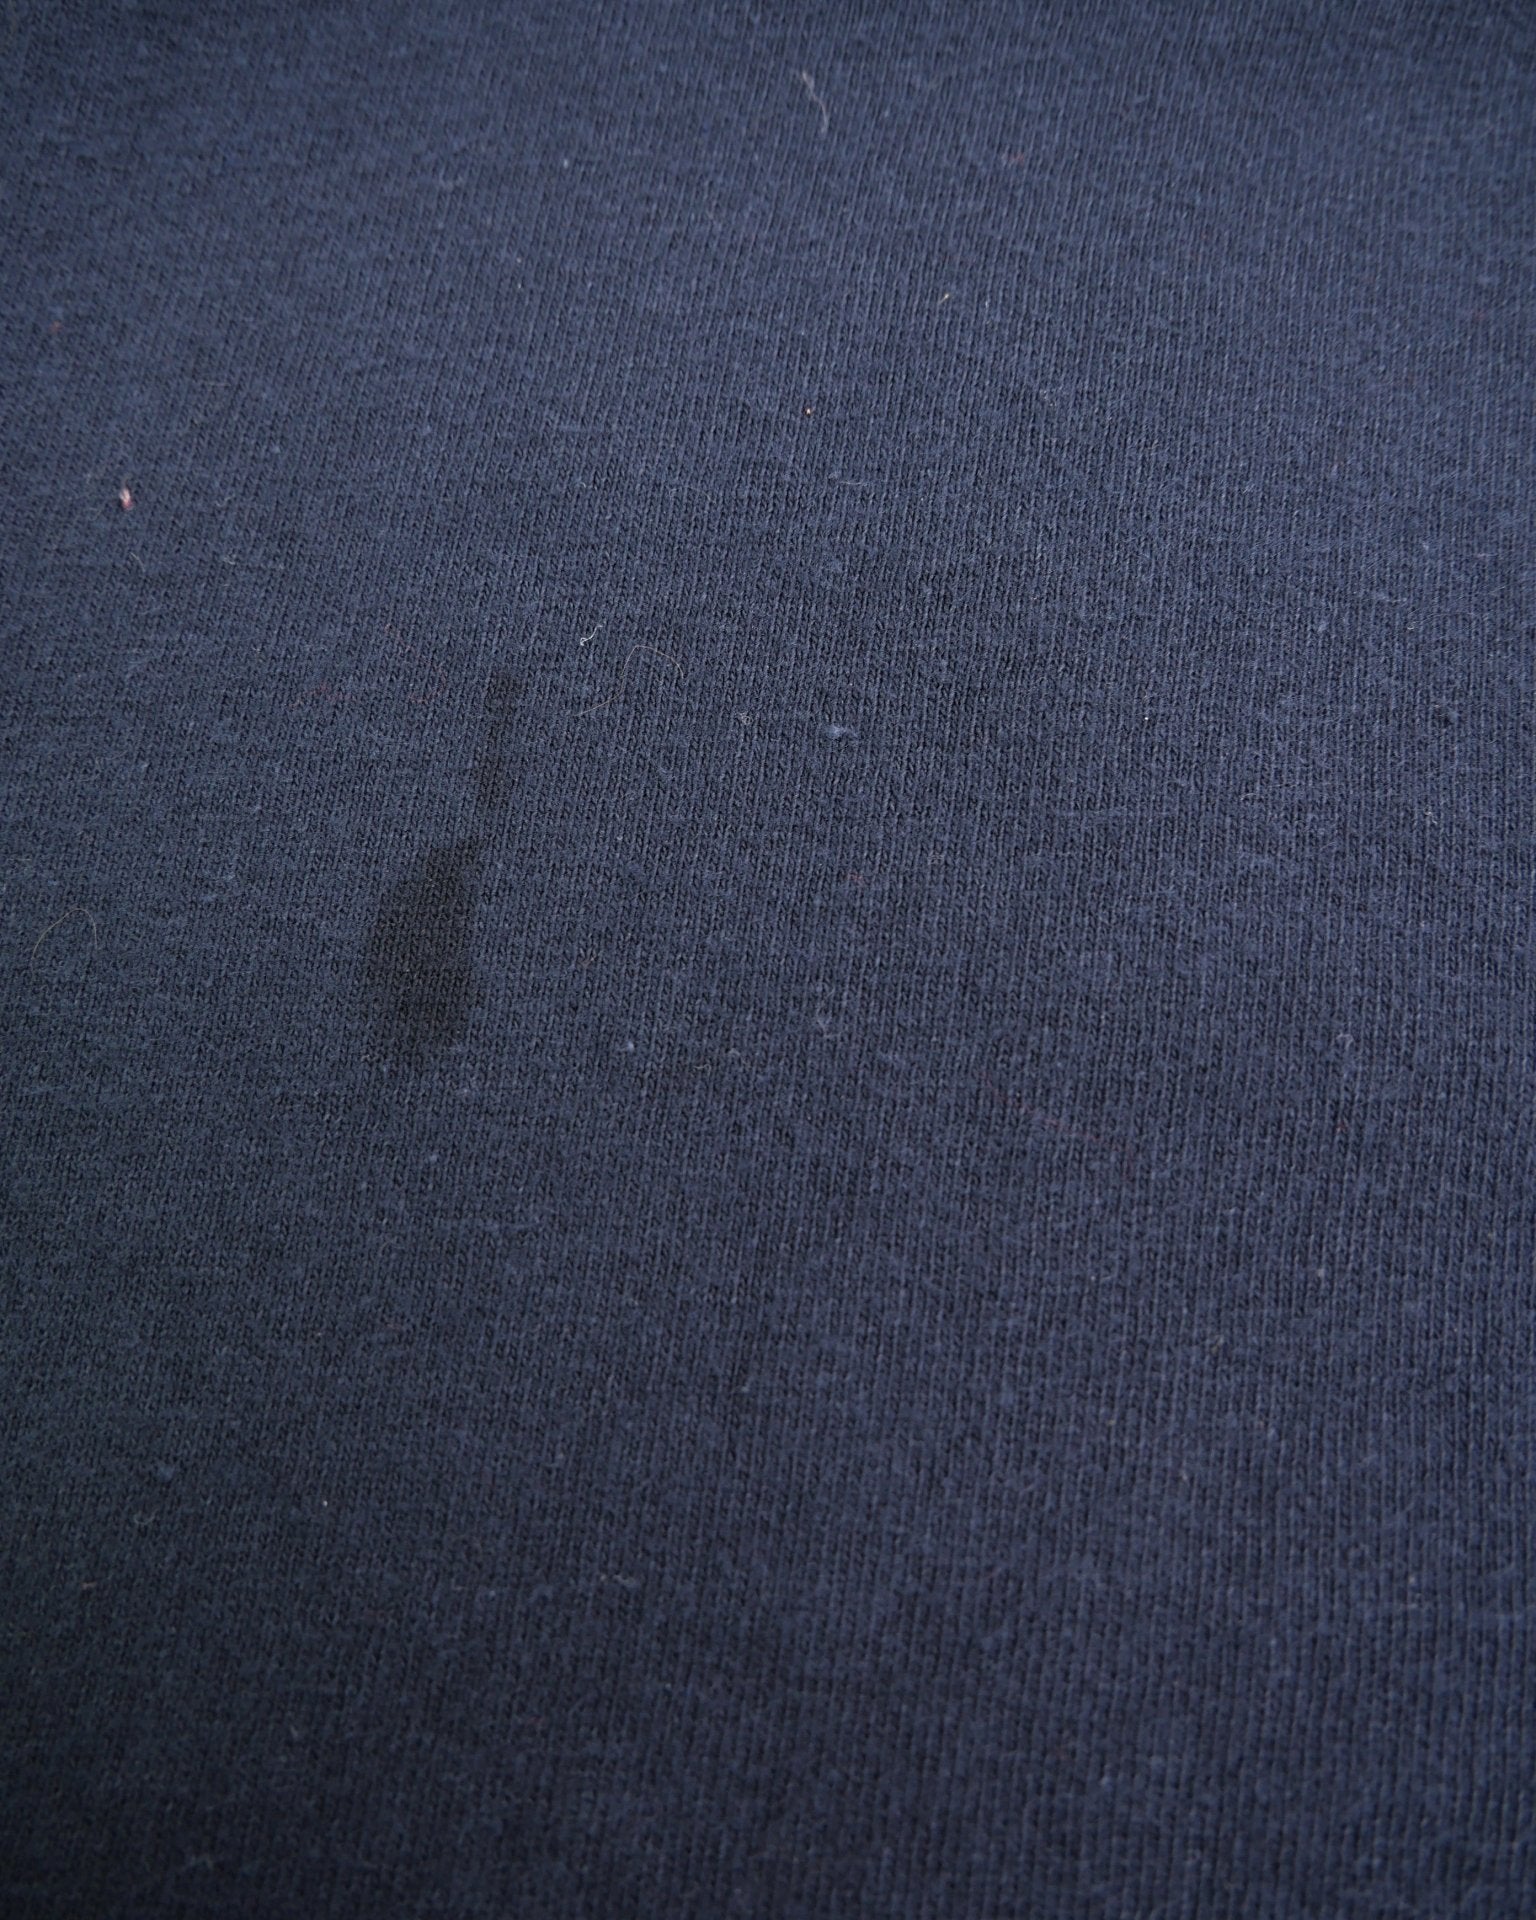 'Minnesota' printed Spellout black Shirt - Peeces